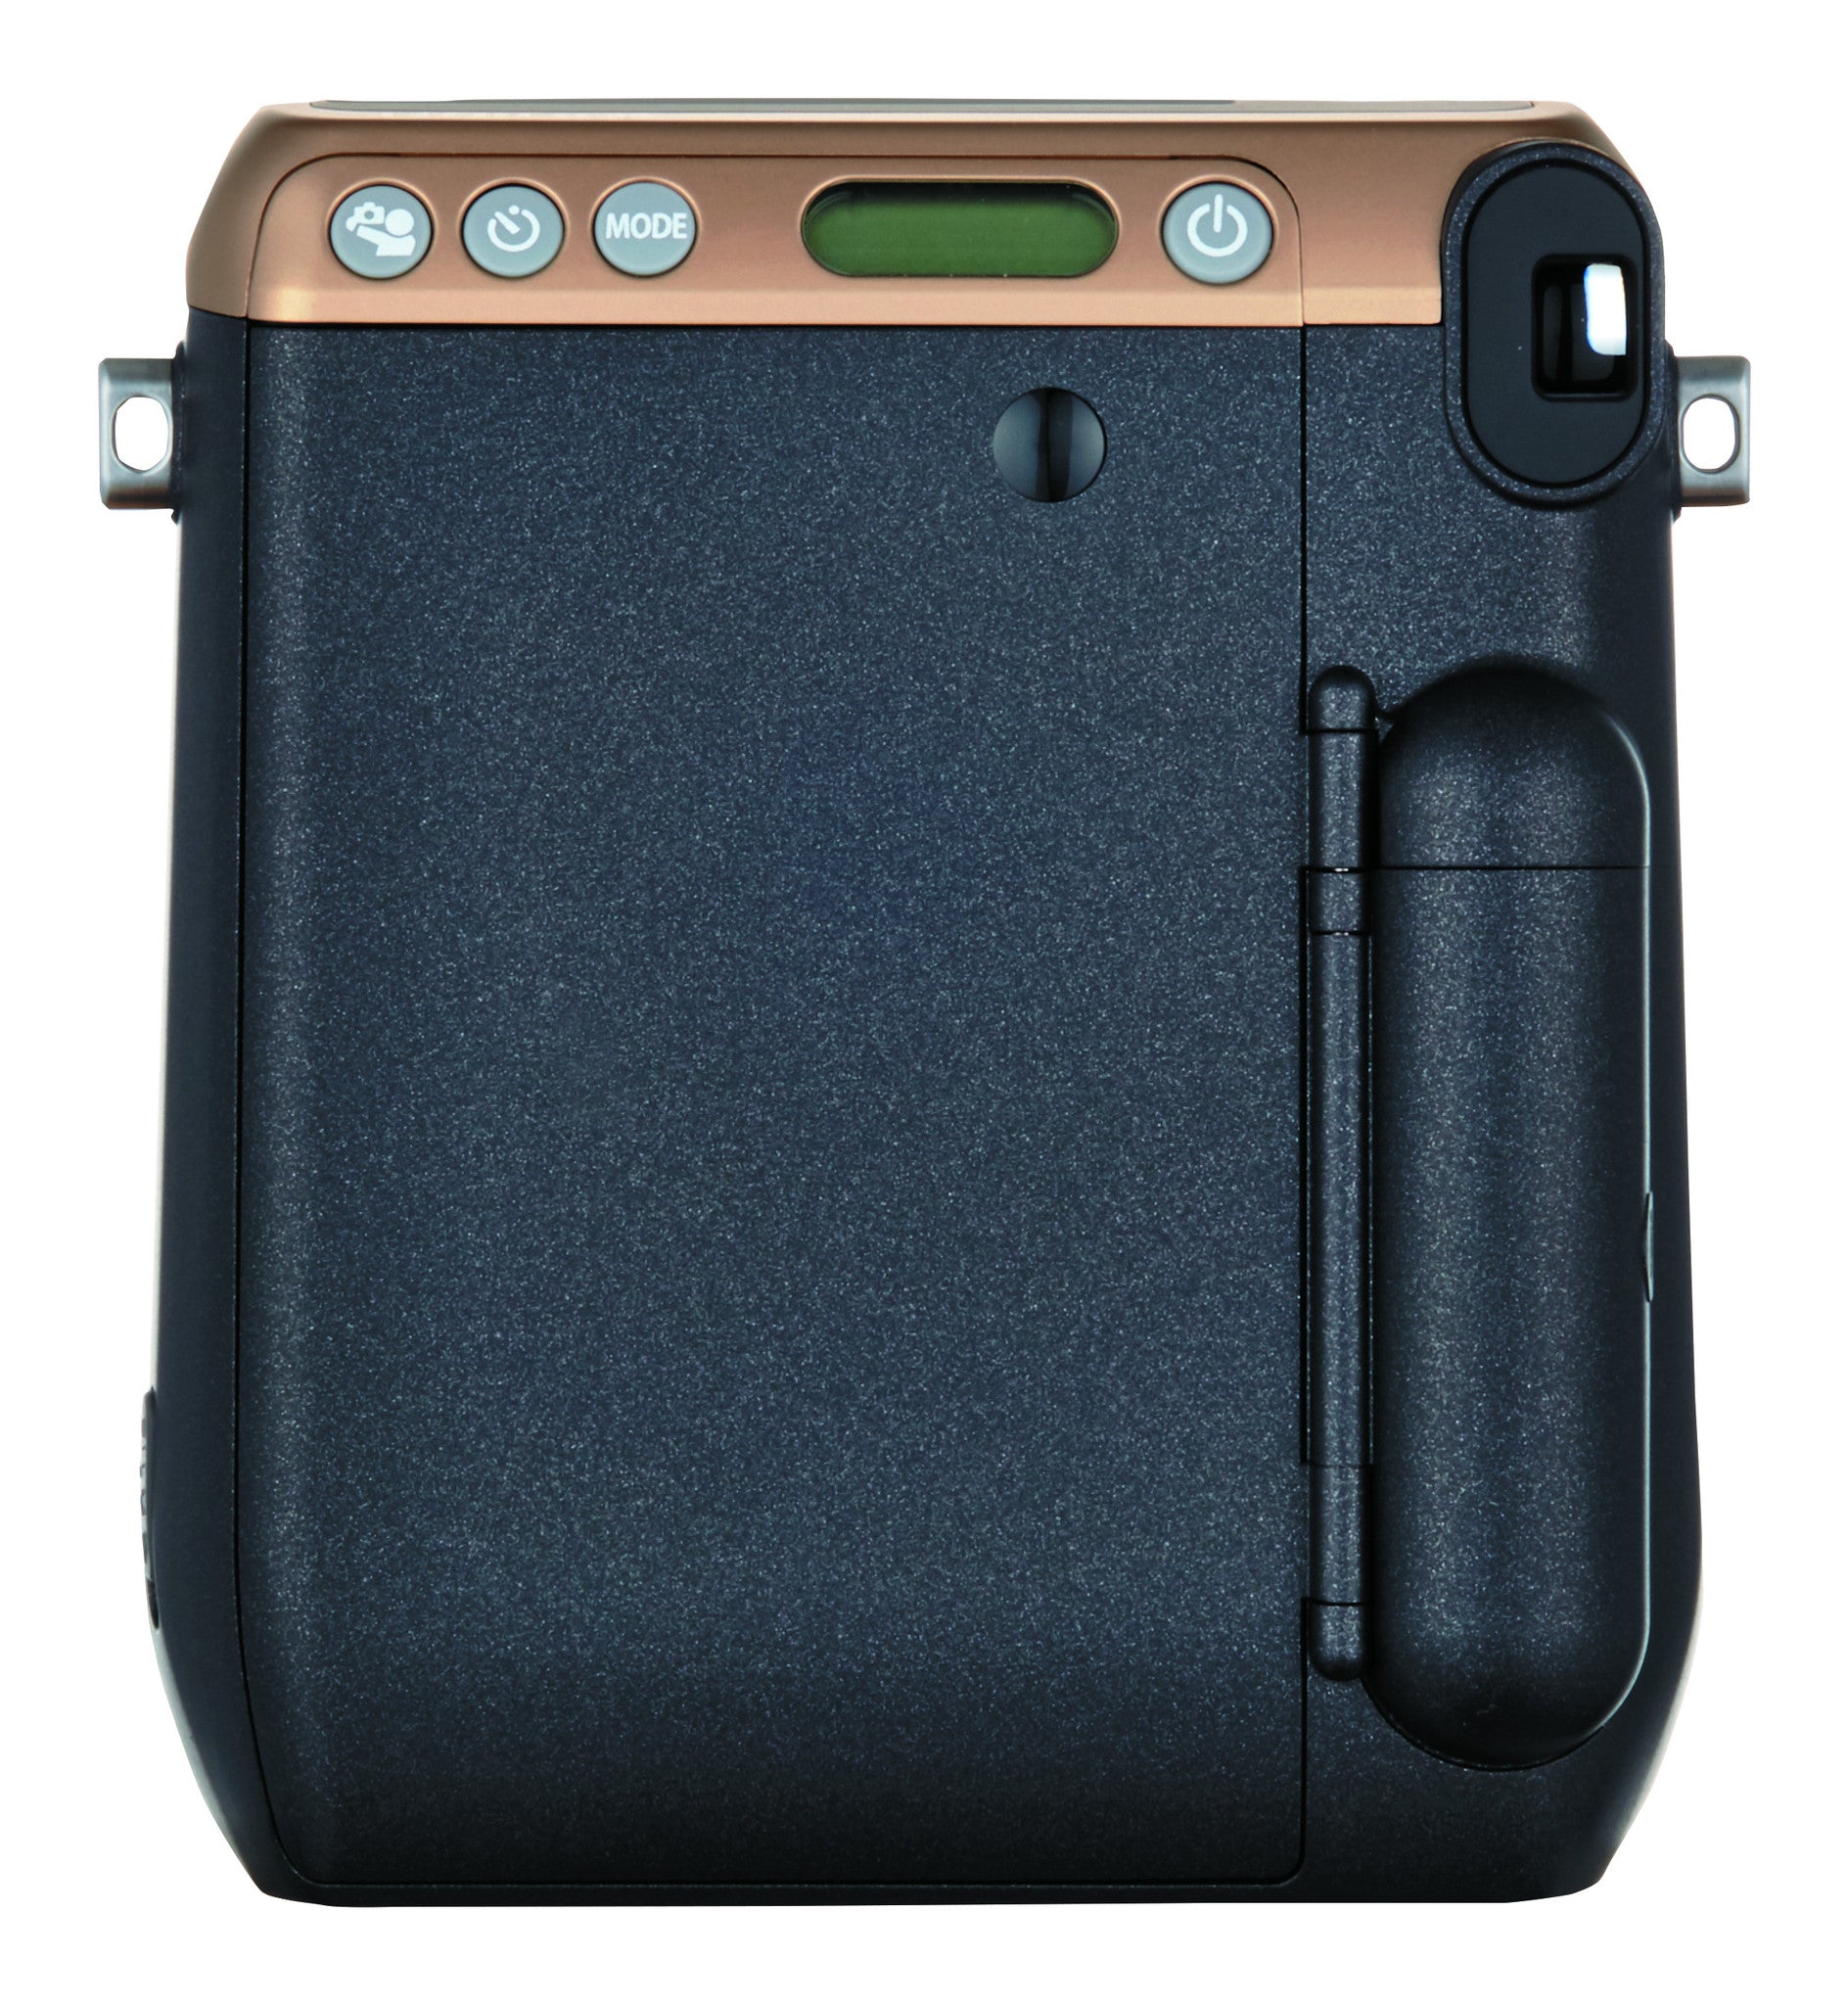 Fujifilm INSTAX Mini 70 Instant Film Camera (Stardust Gold), camera film cameras, Fujifilm - Pictureline  - 2